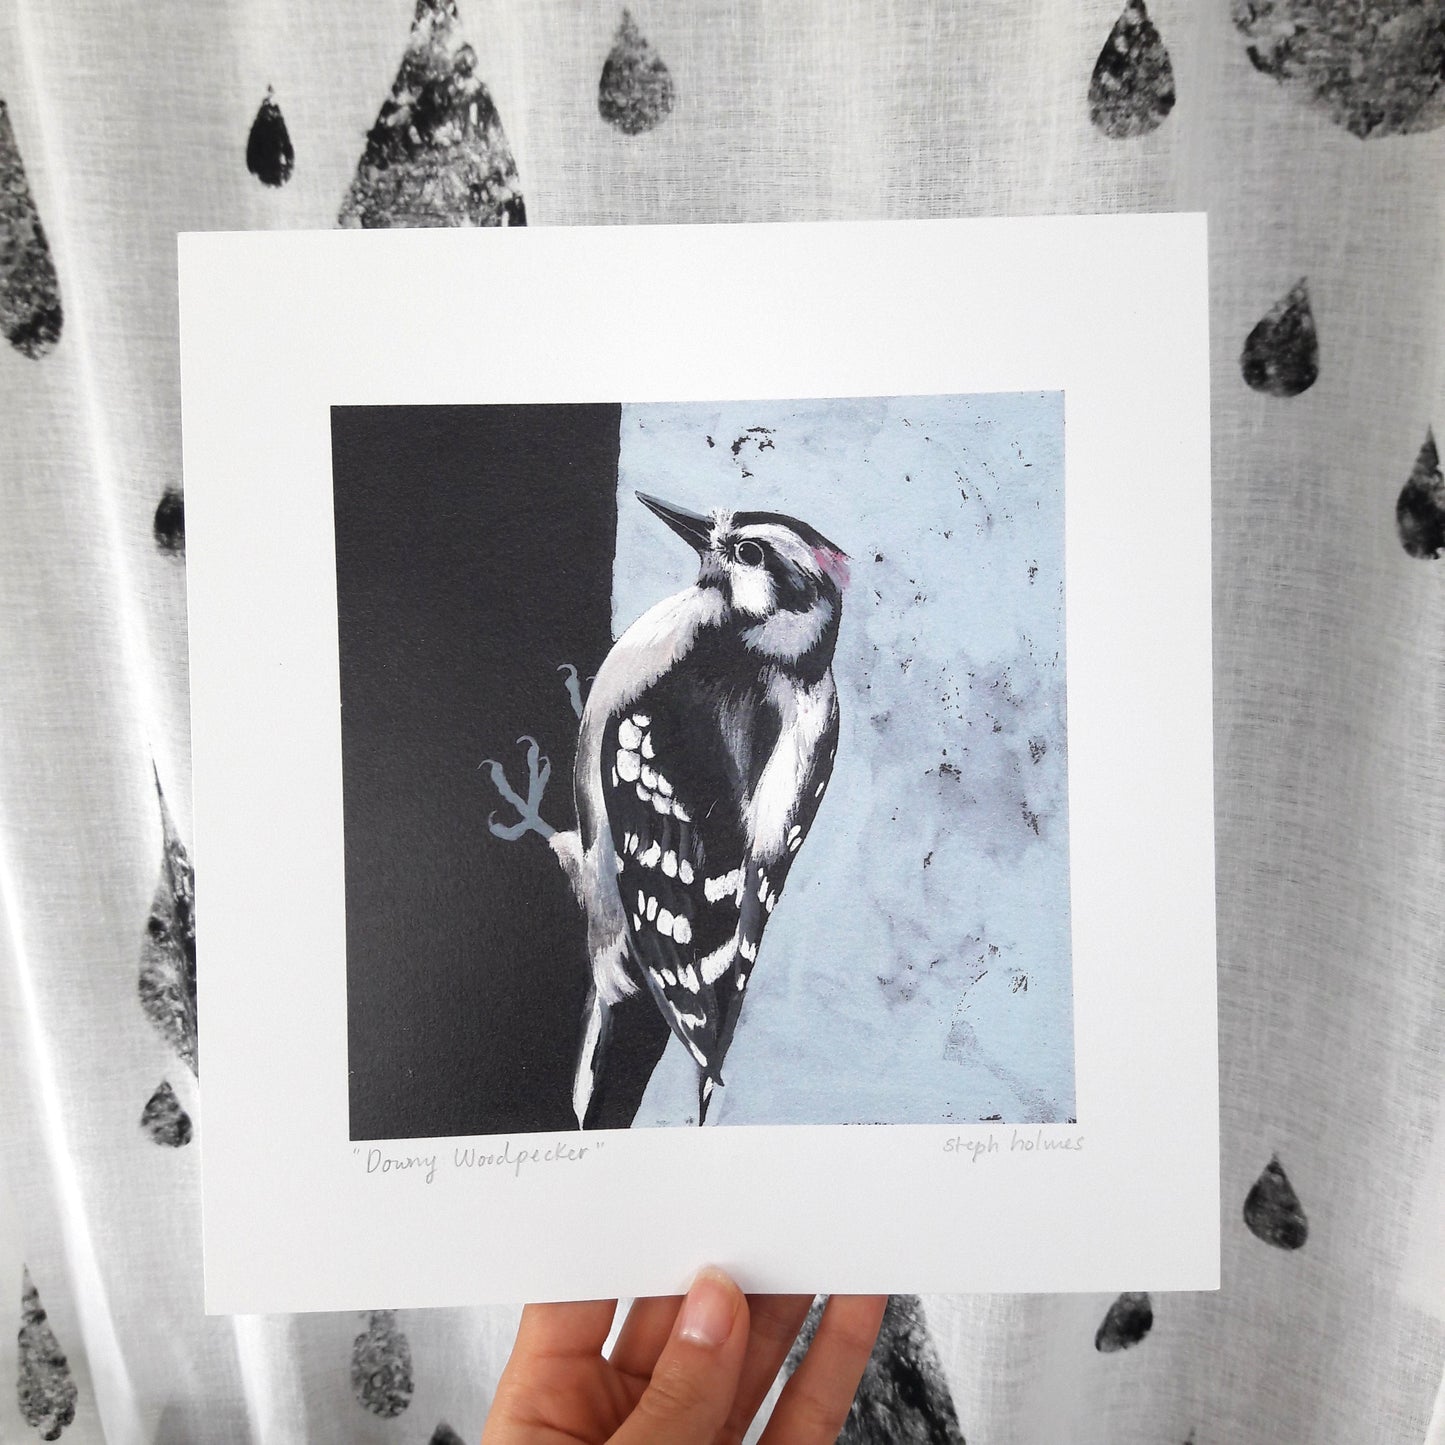 Downy Woodpecker print